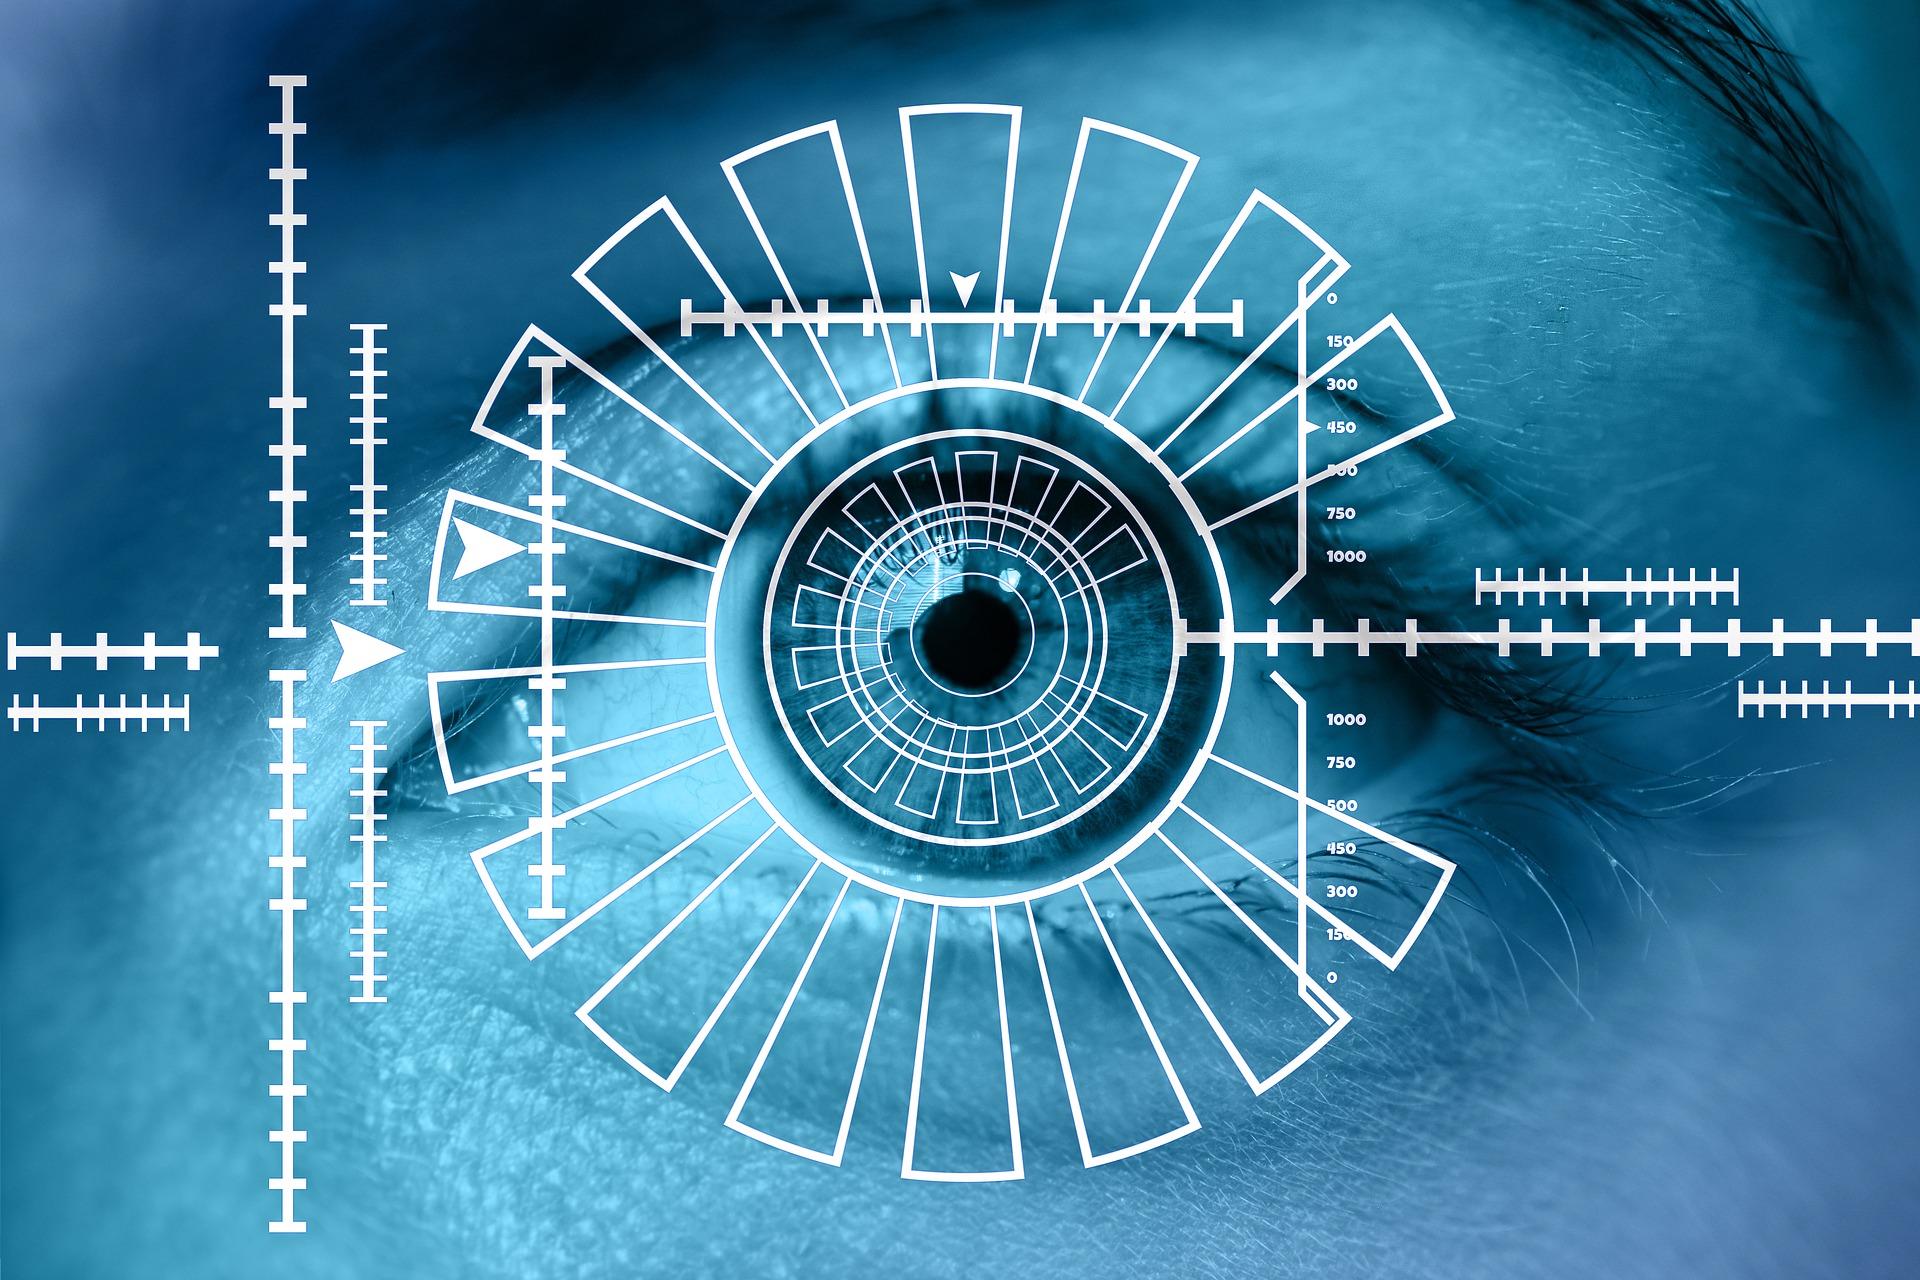 iris scan technology collecting data from human eyeball